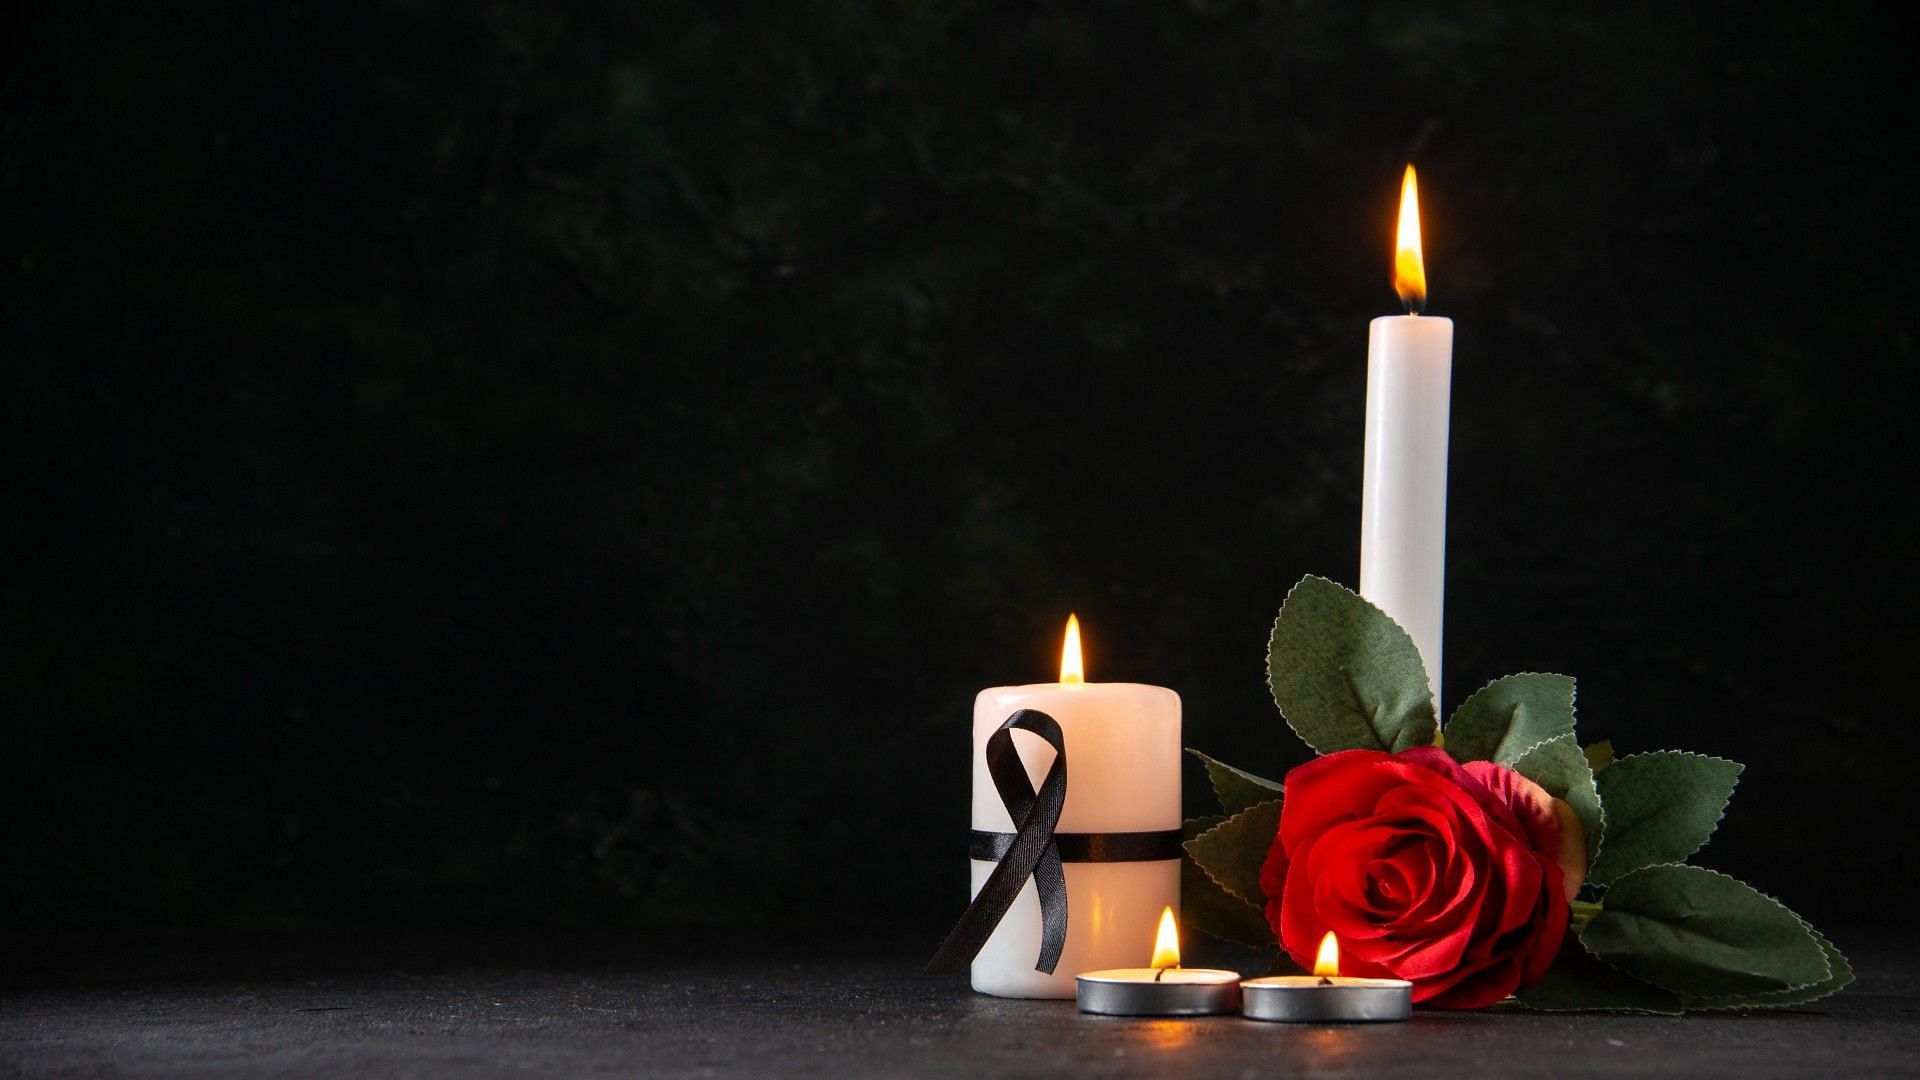 Represenative image of a tribute candle (Image via MDJAFF/Freepik)